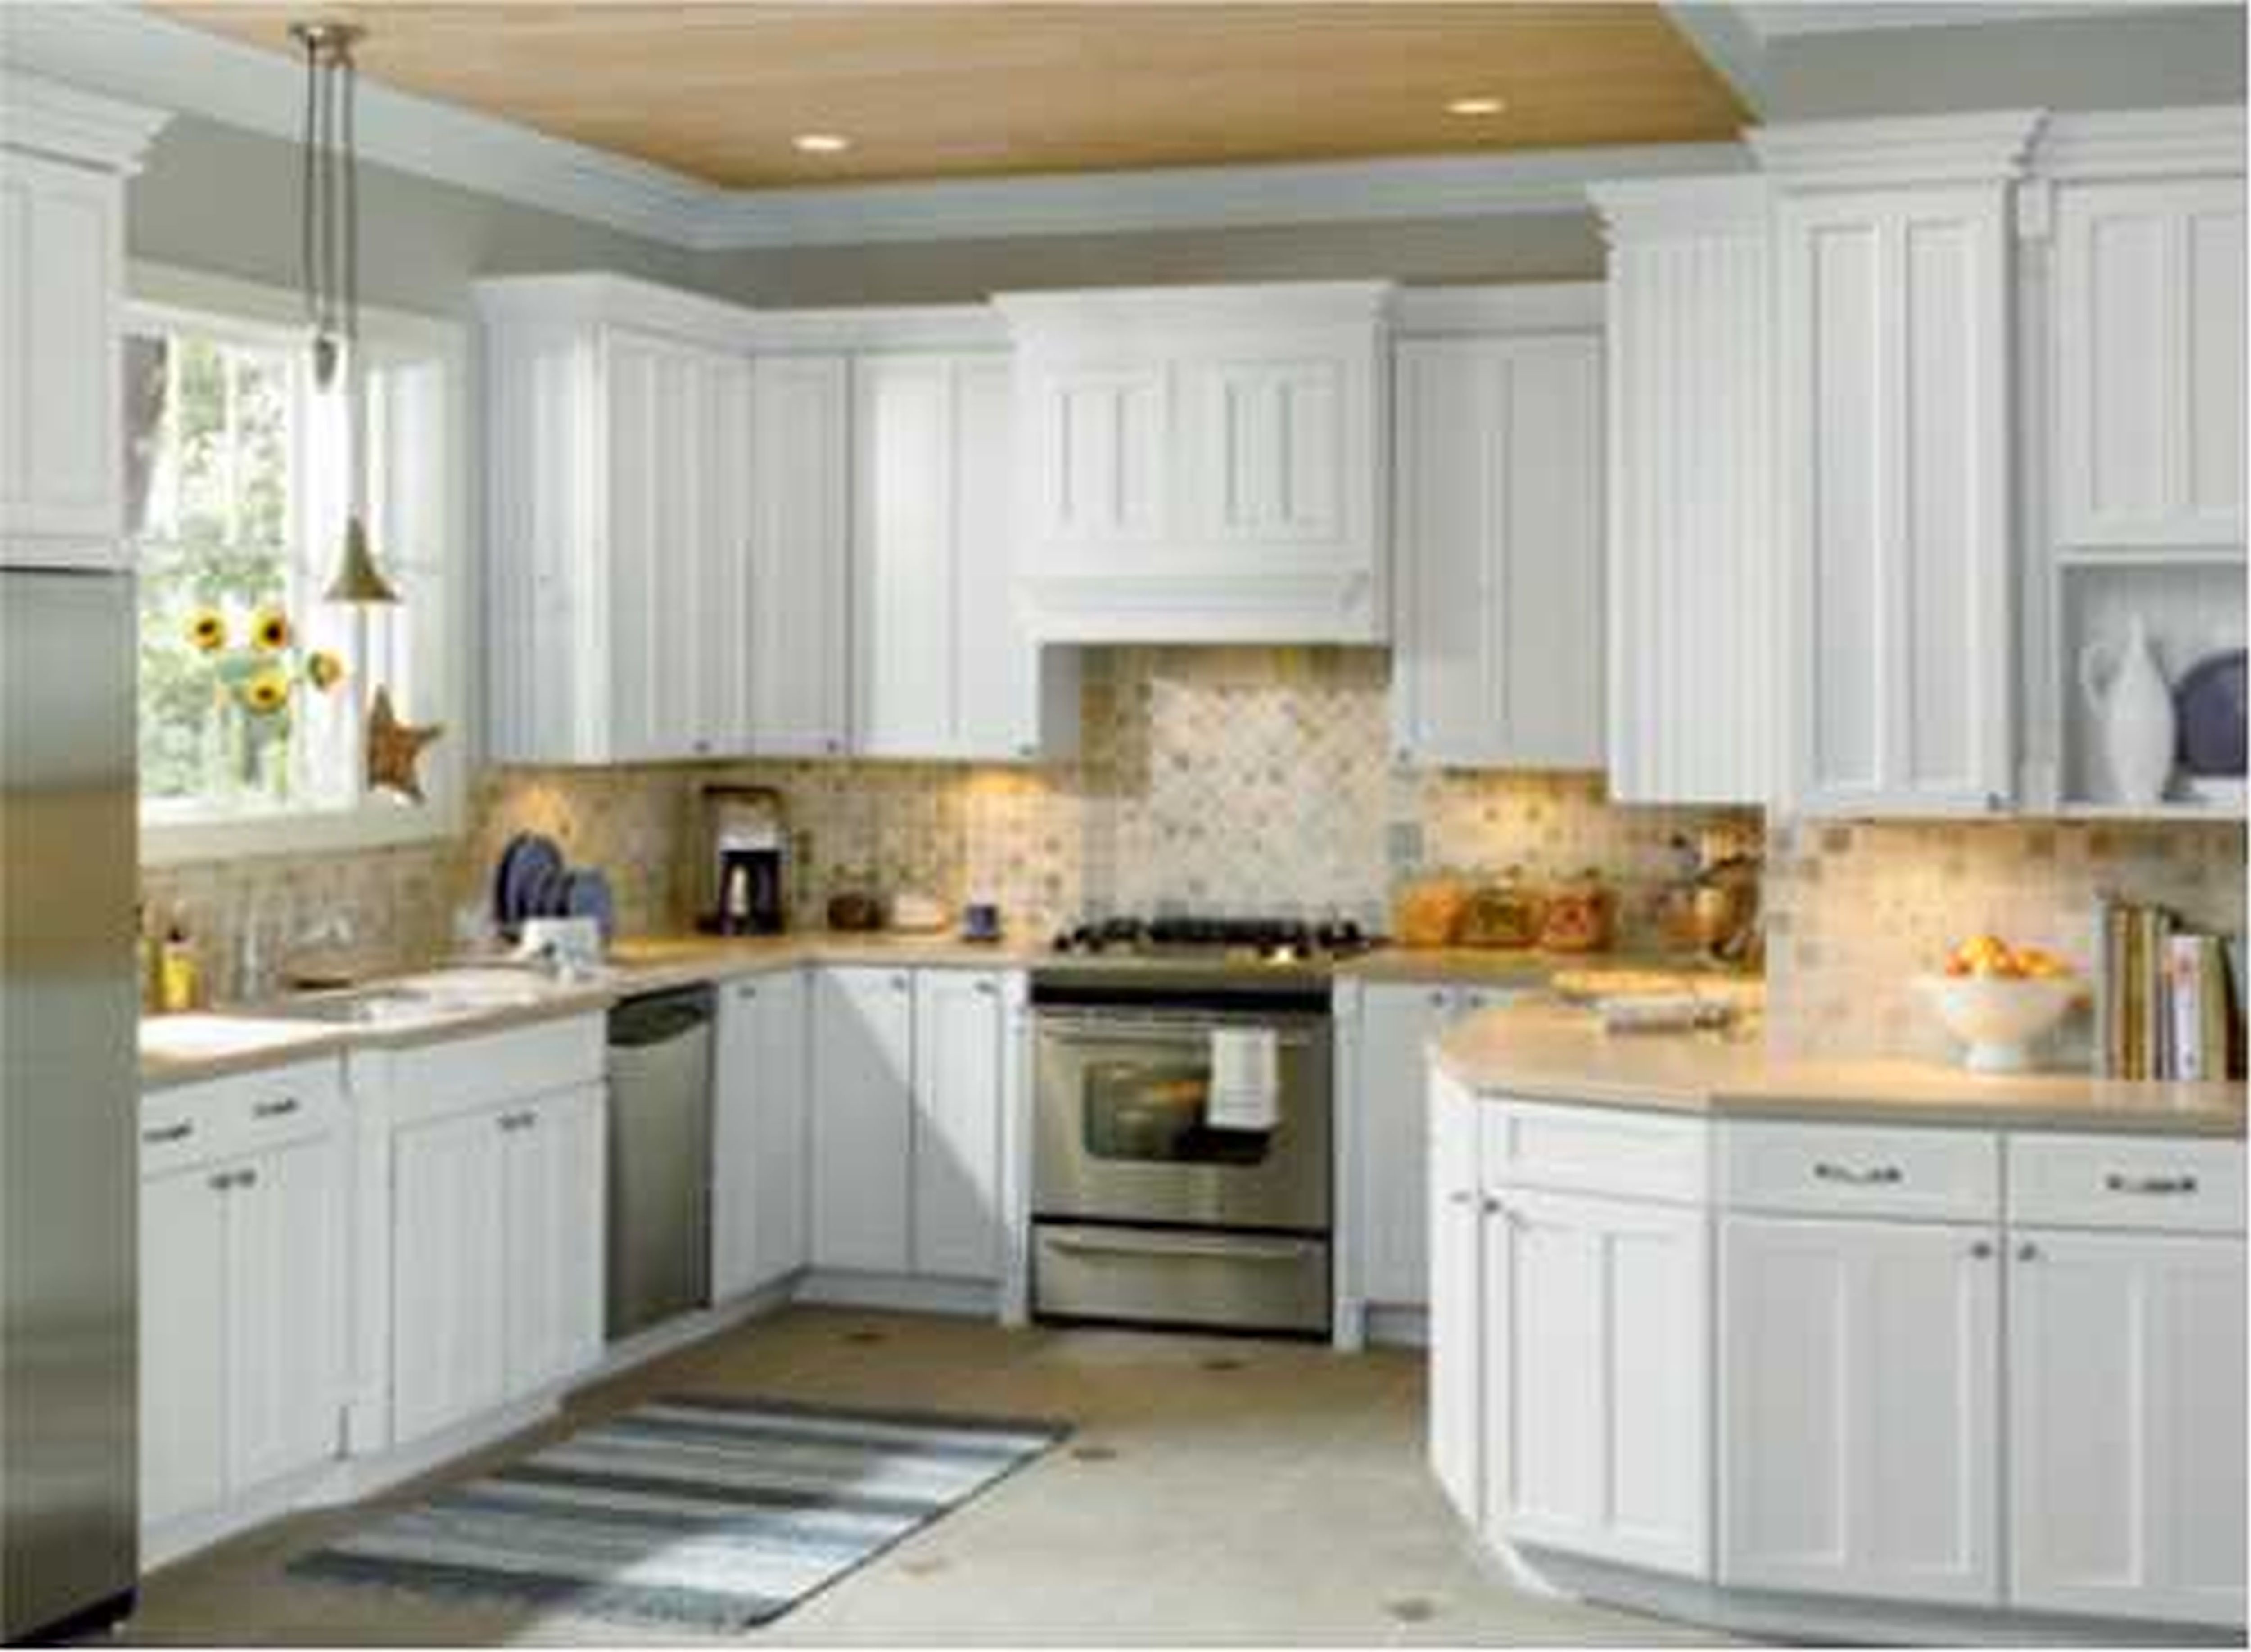 10 Trendy Backsplash Ideas For Kitchen With White Cabinets kitchen trend colors kitchen backsplash ideas black granite 1 2023